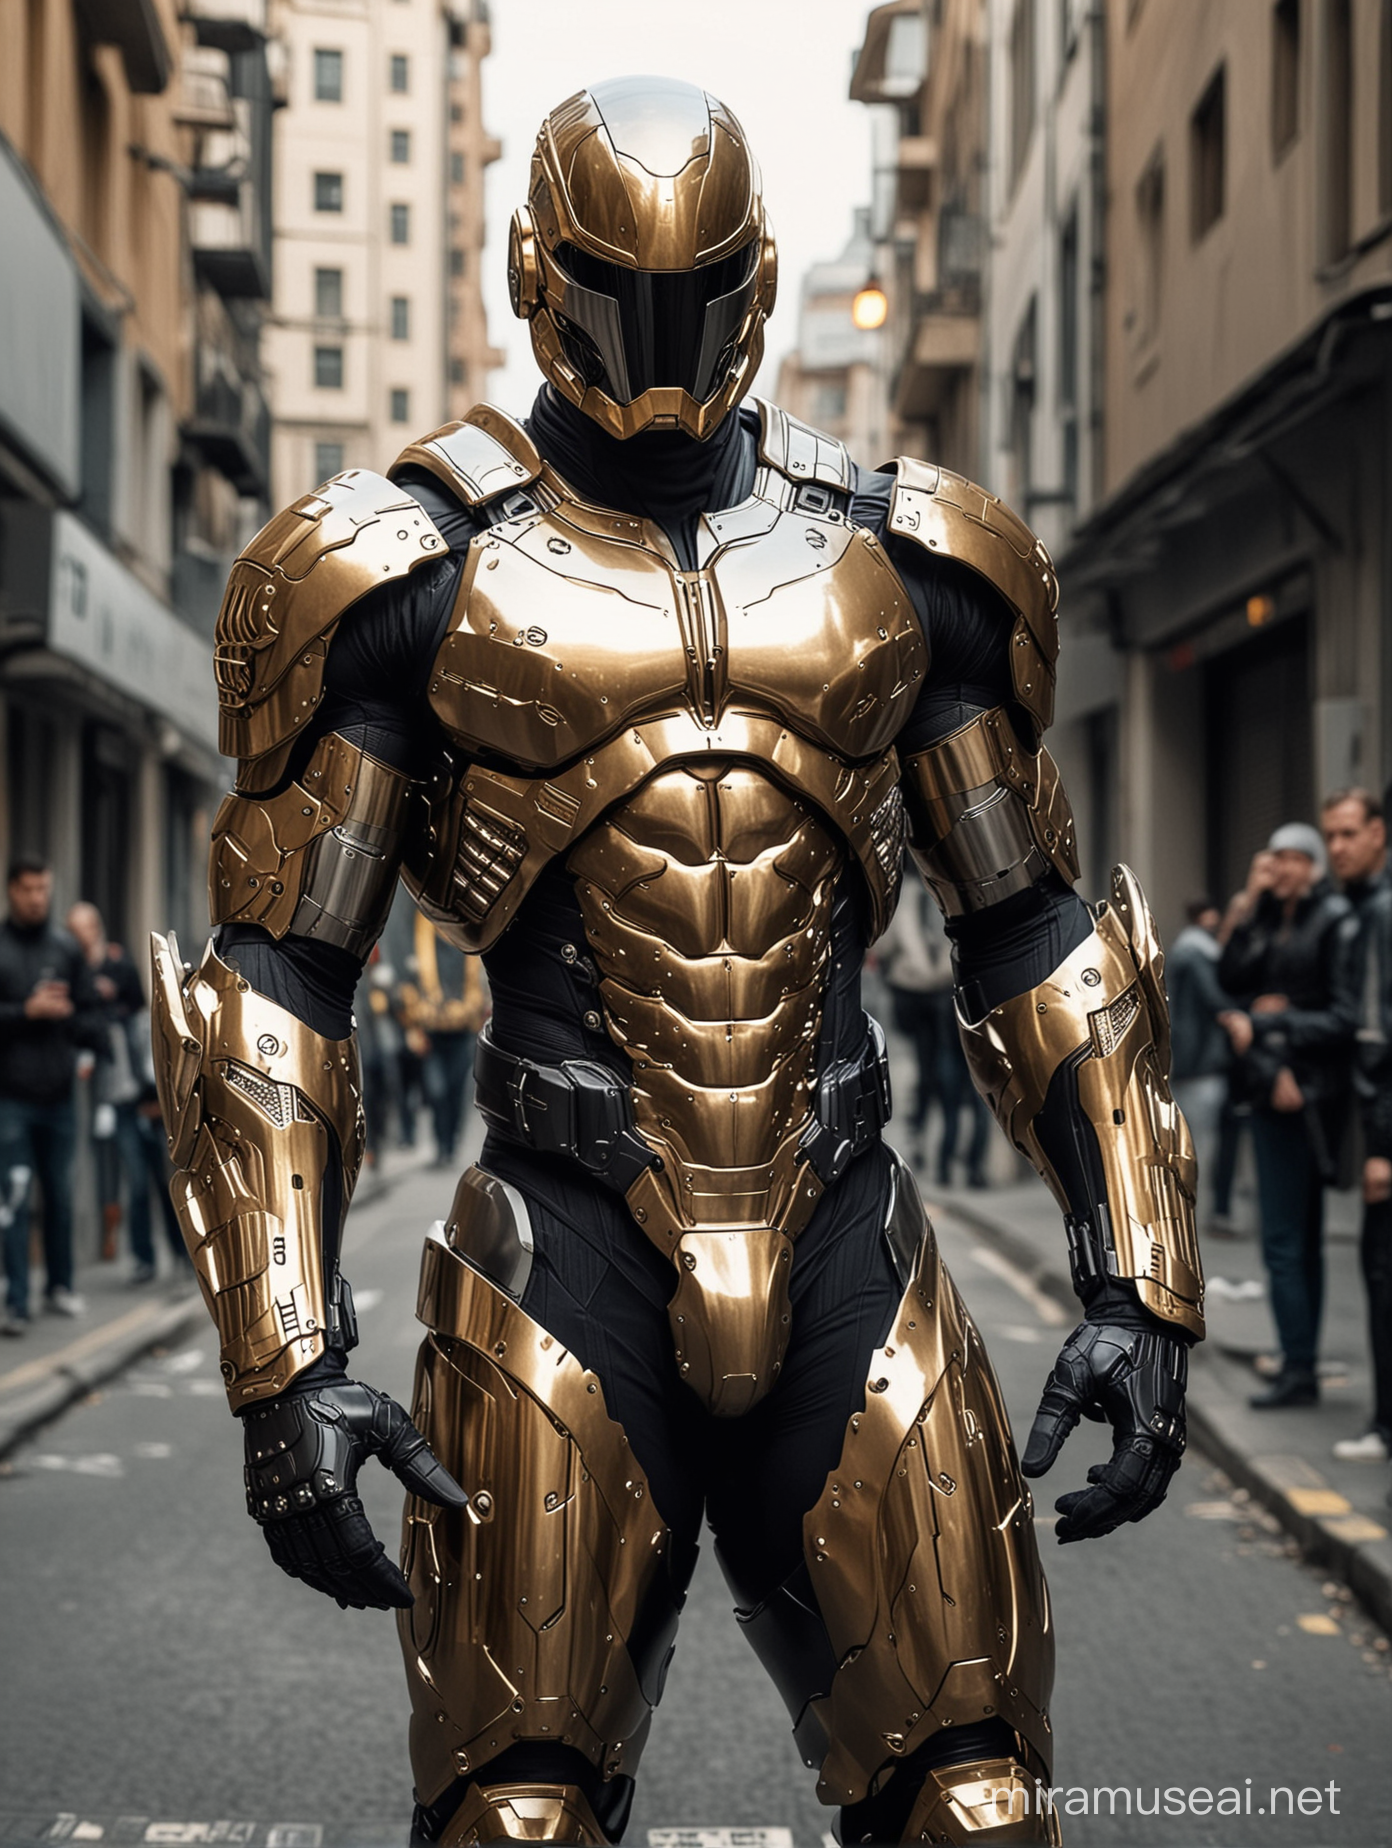 SciFi Bodybuilder in HighTech Armor Displaying Power on Urban Street